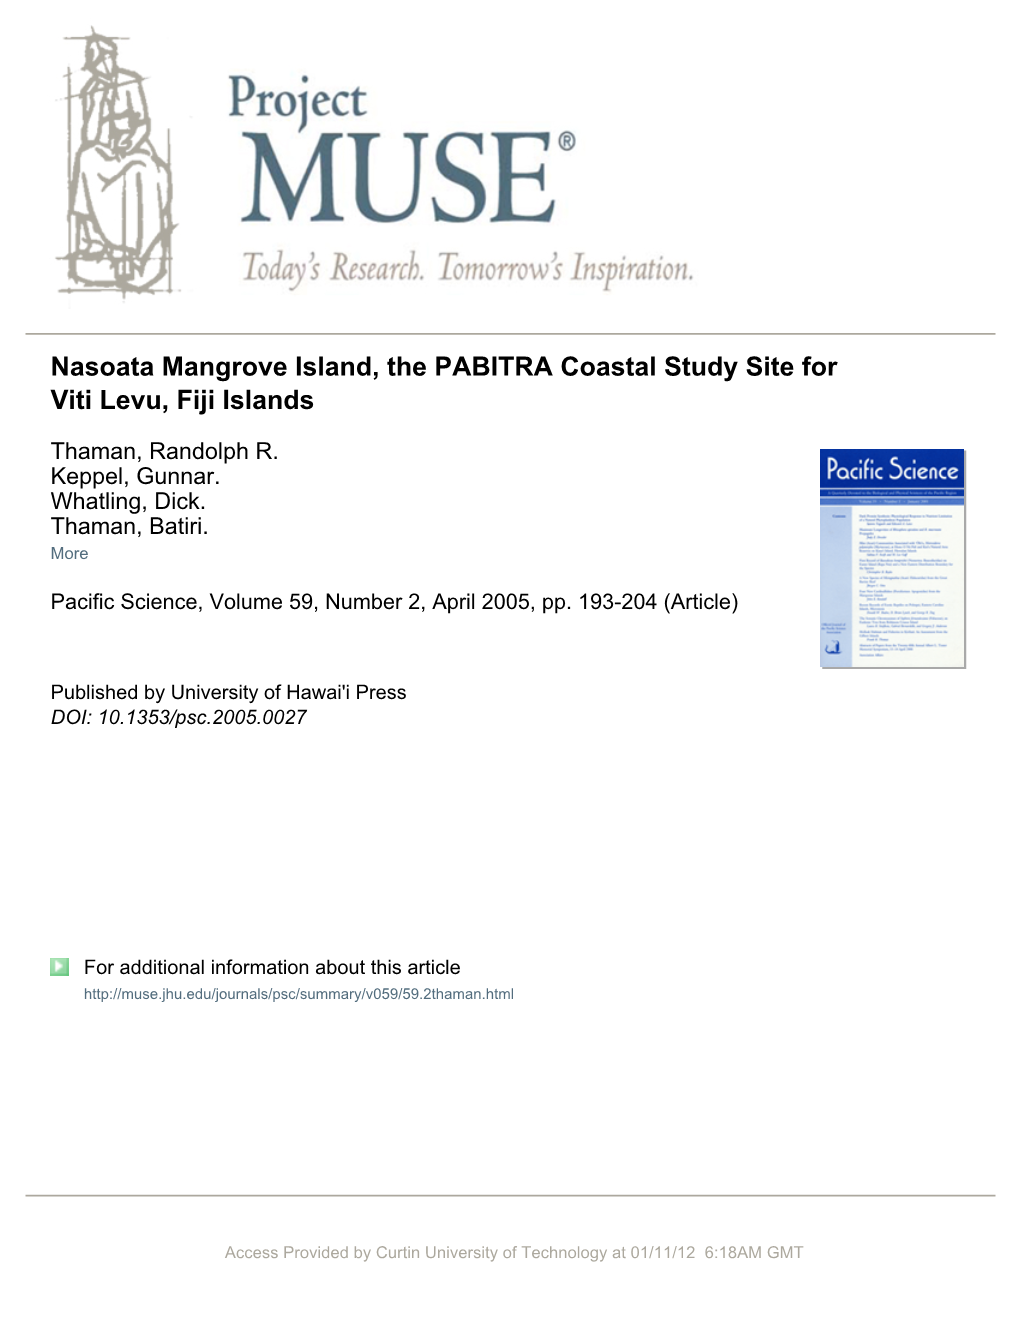 Nasoata Mangrove Island, the PABITRA Coastal Study Site for Viti Levu, Fiji Islands